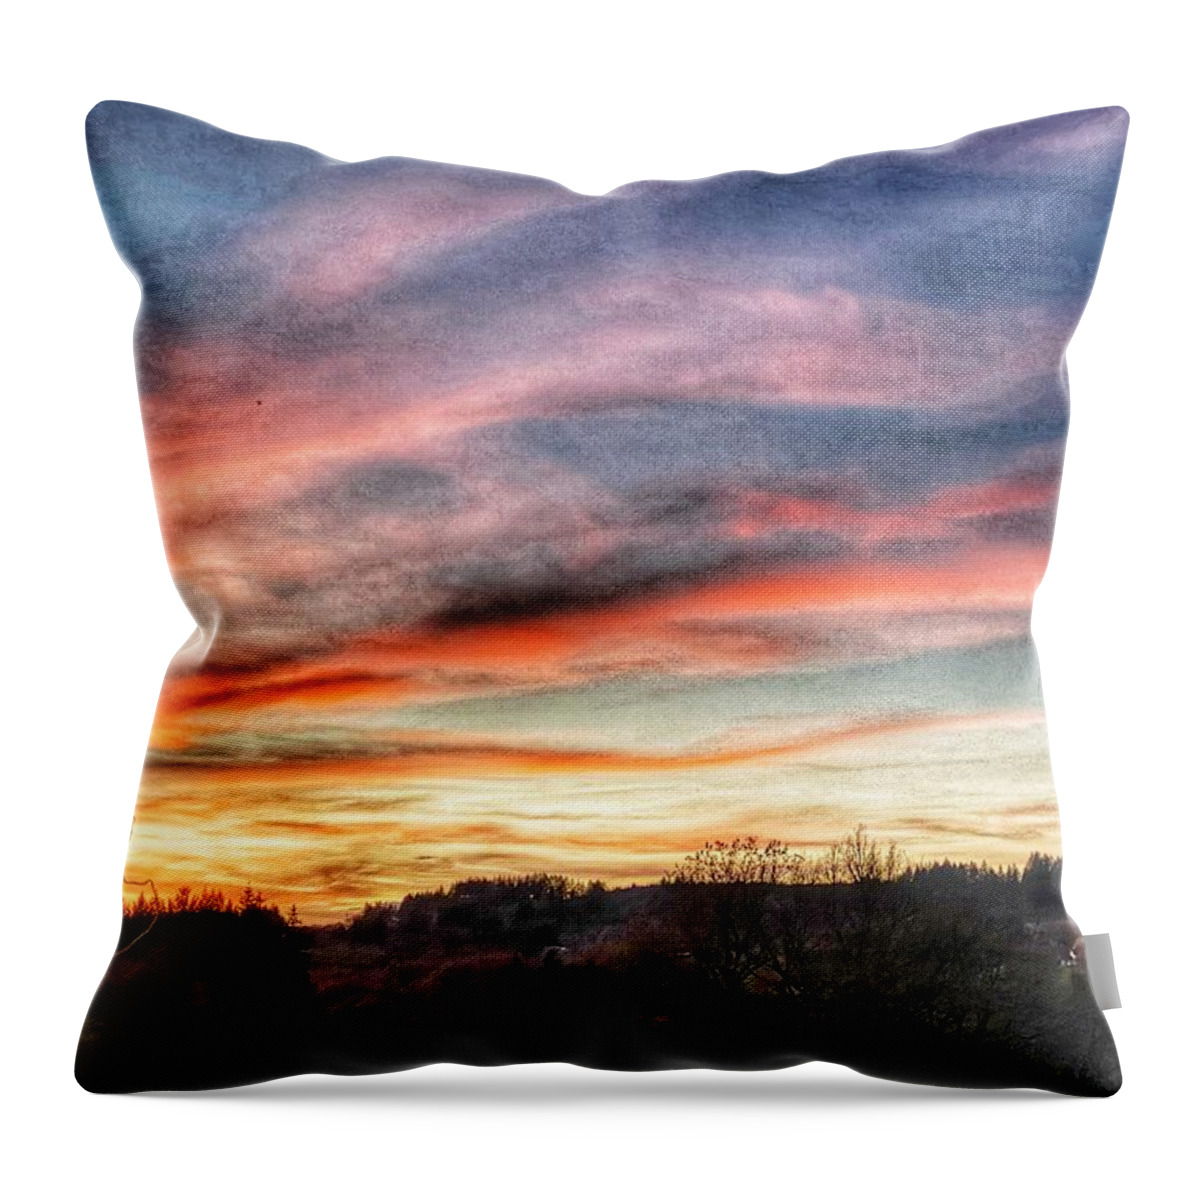 Evening Sky Throw Pillow featuring the photograph Evening sky by Chris Clark